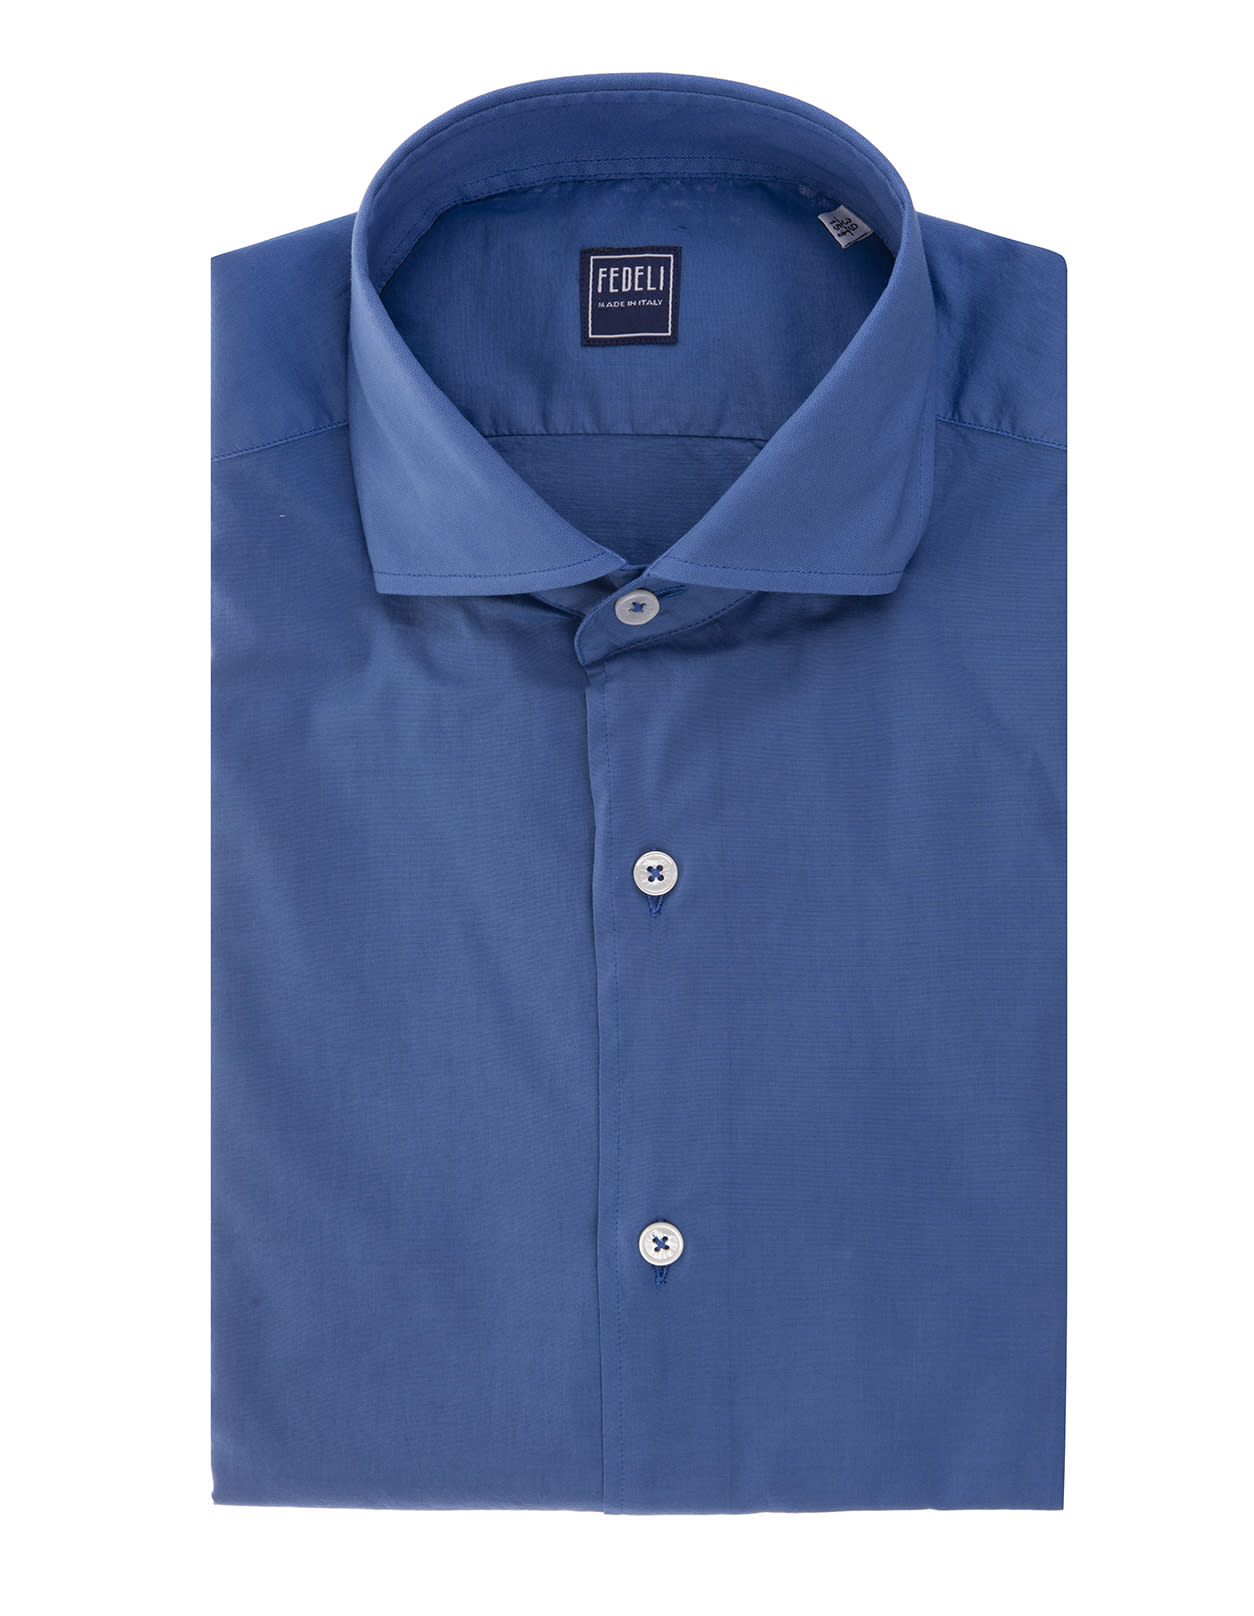 Fedeli Man Royal Blue Lightweight Cotton Shirt